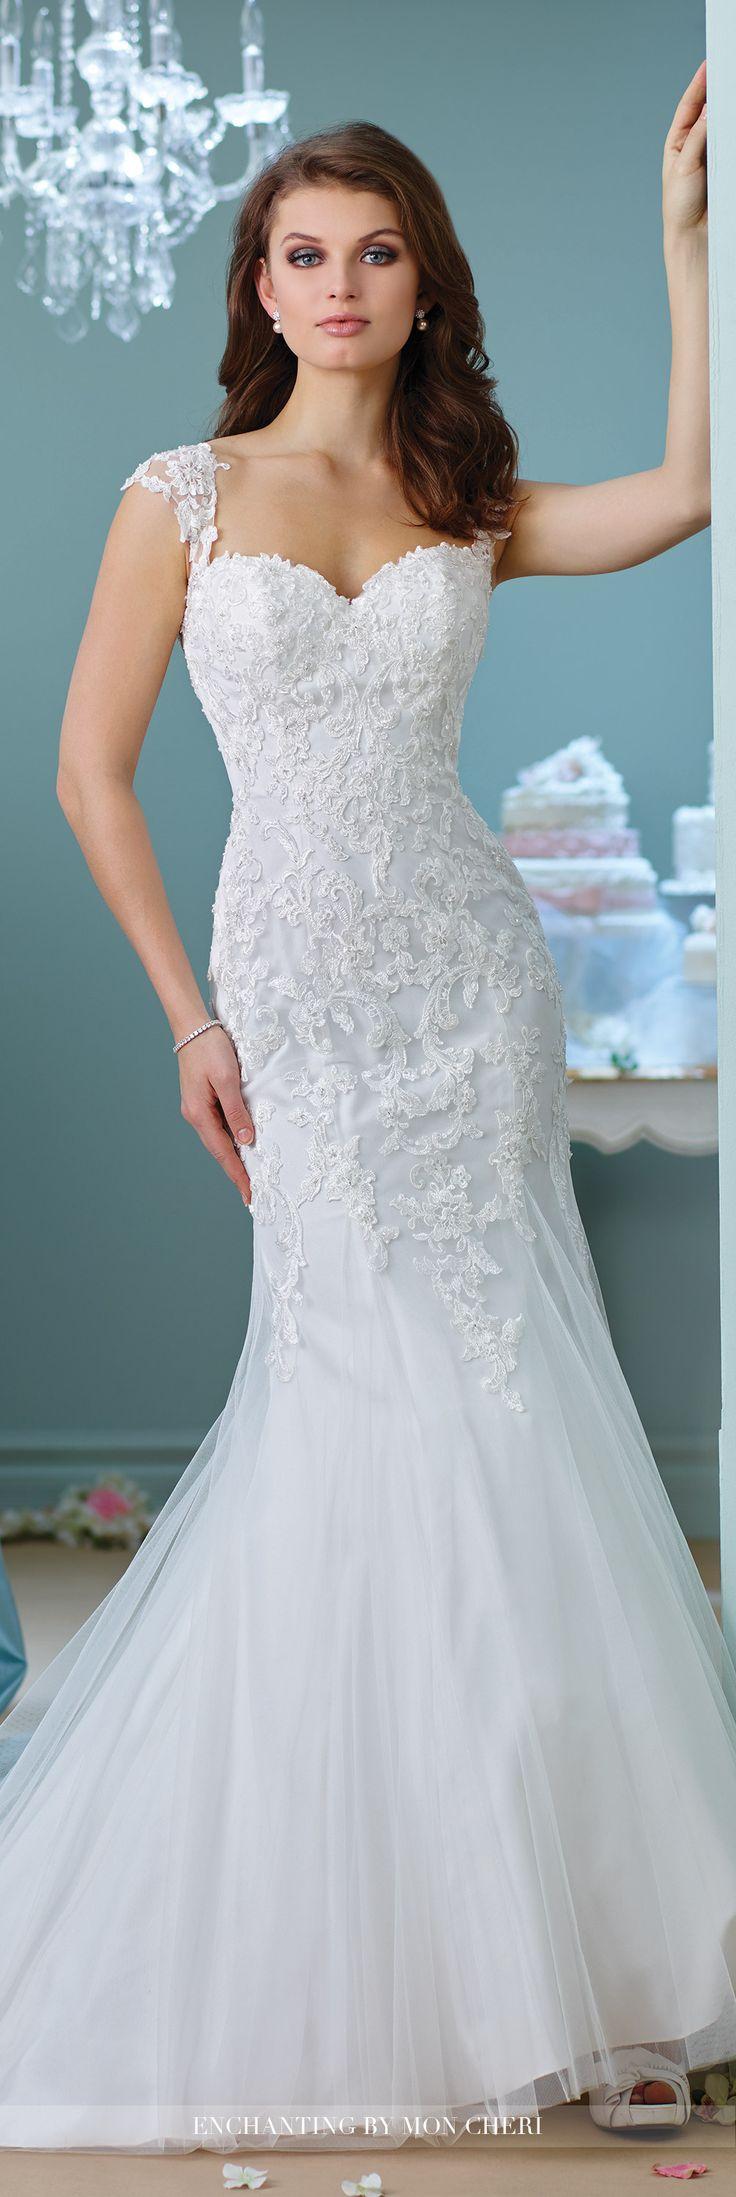 Lace Cap Sleeve Wedding Dress- 216156- Enchanting By Mon Cheri #2715057 ...